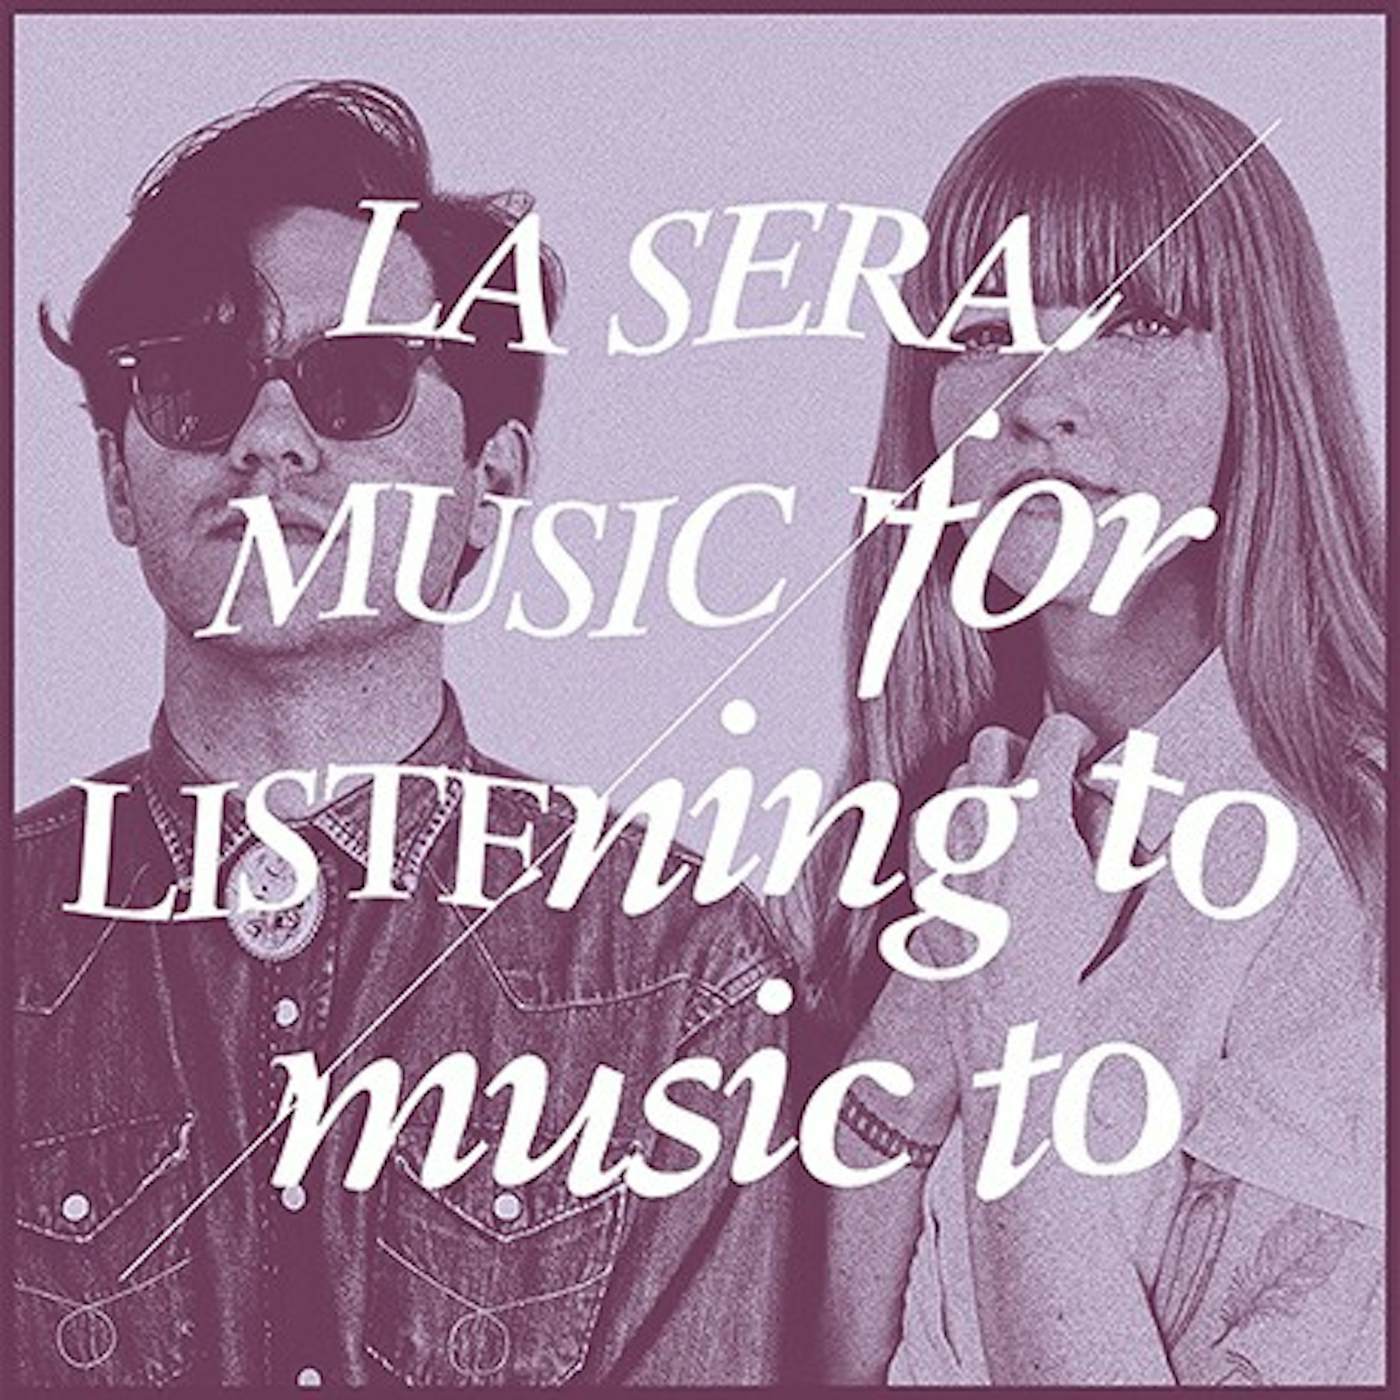 La Sera Music For Listening To Music To (Garage Sale)